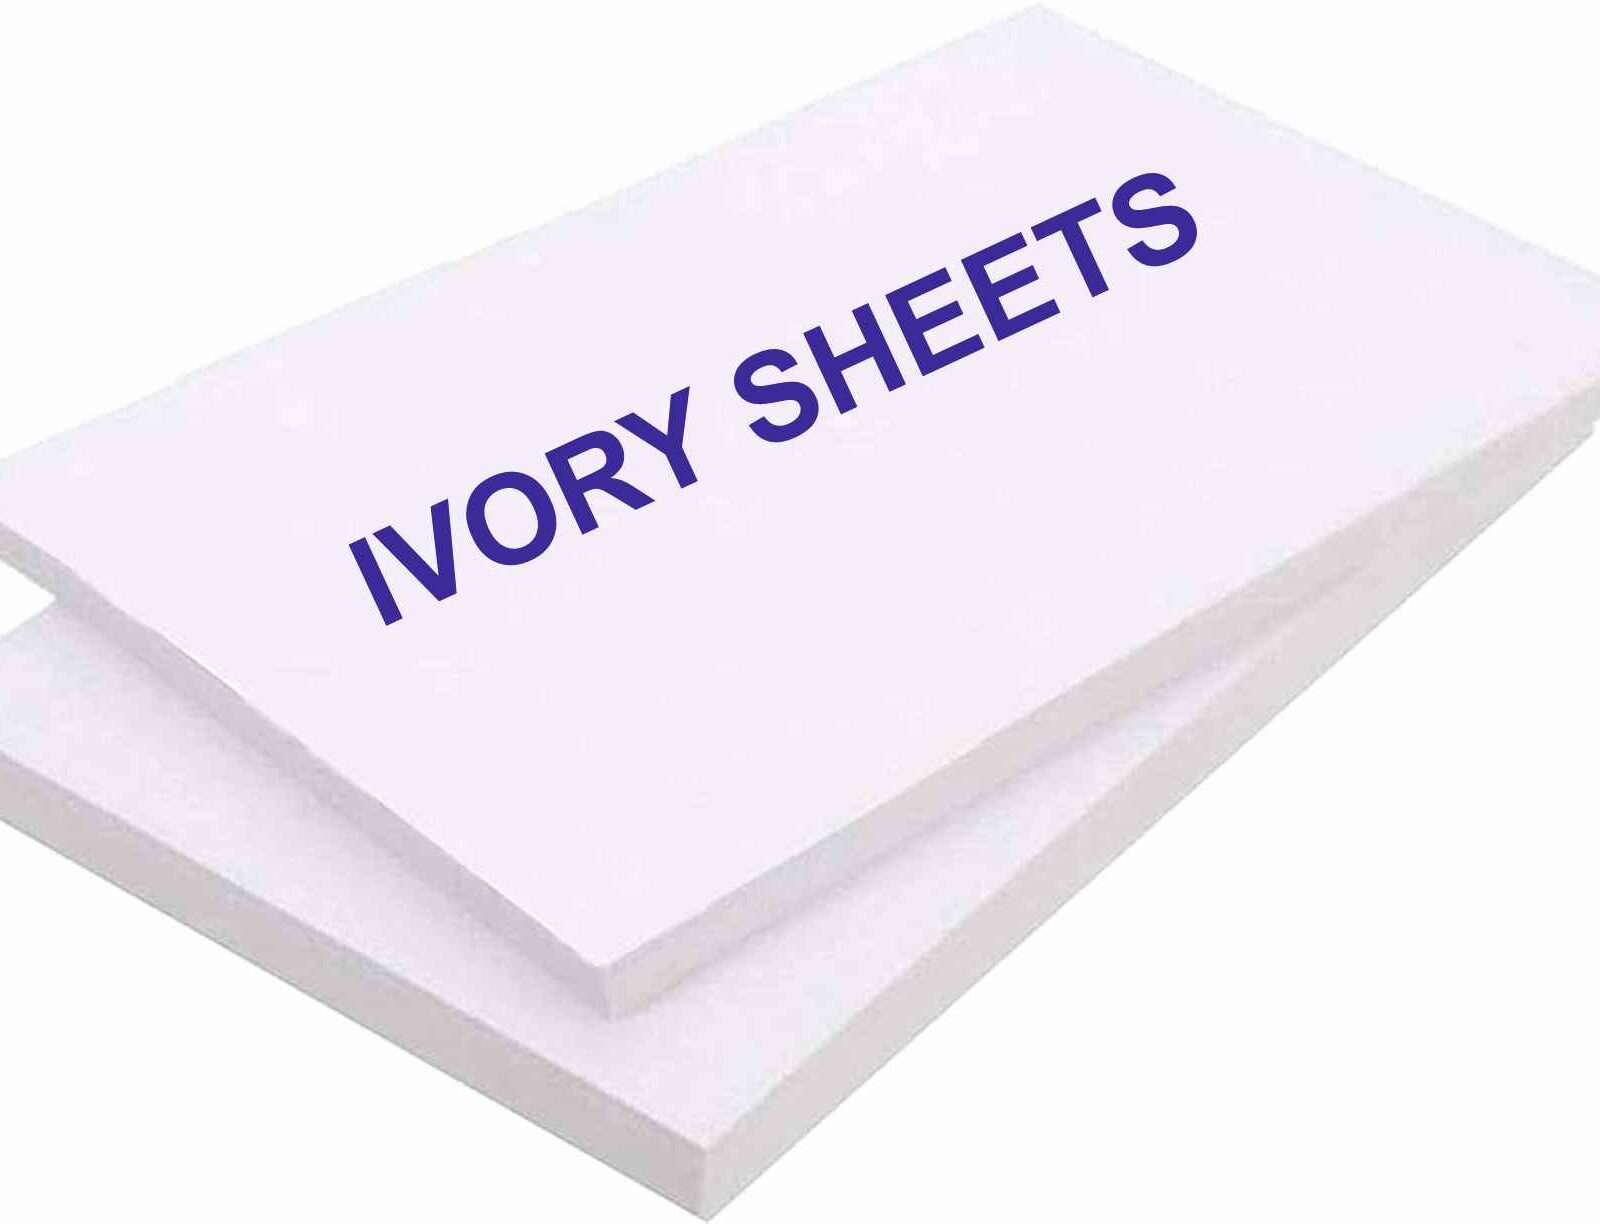 Ivory Sheets